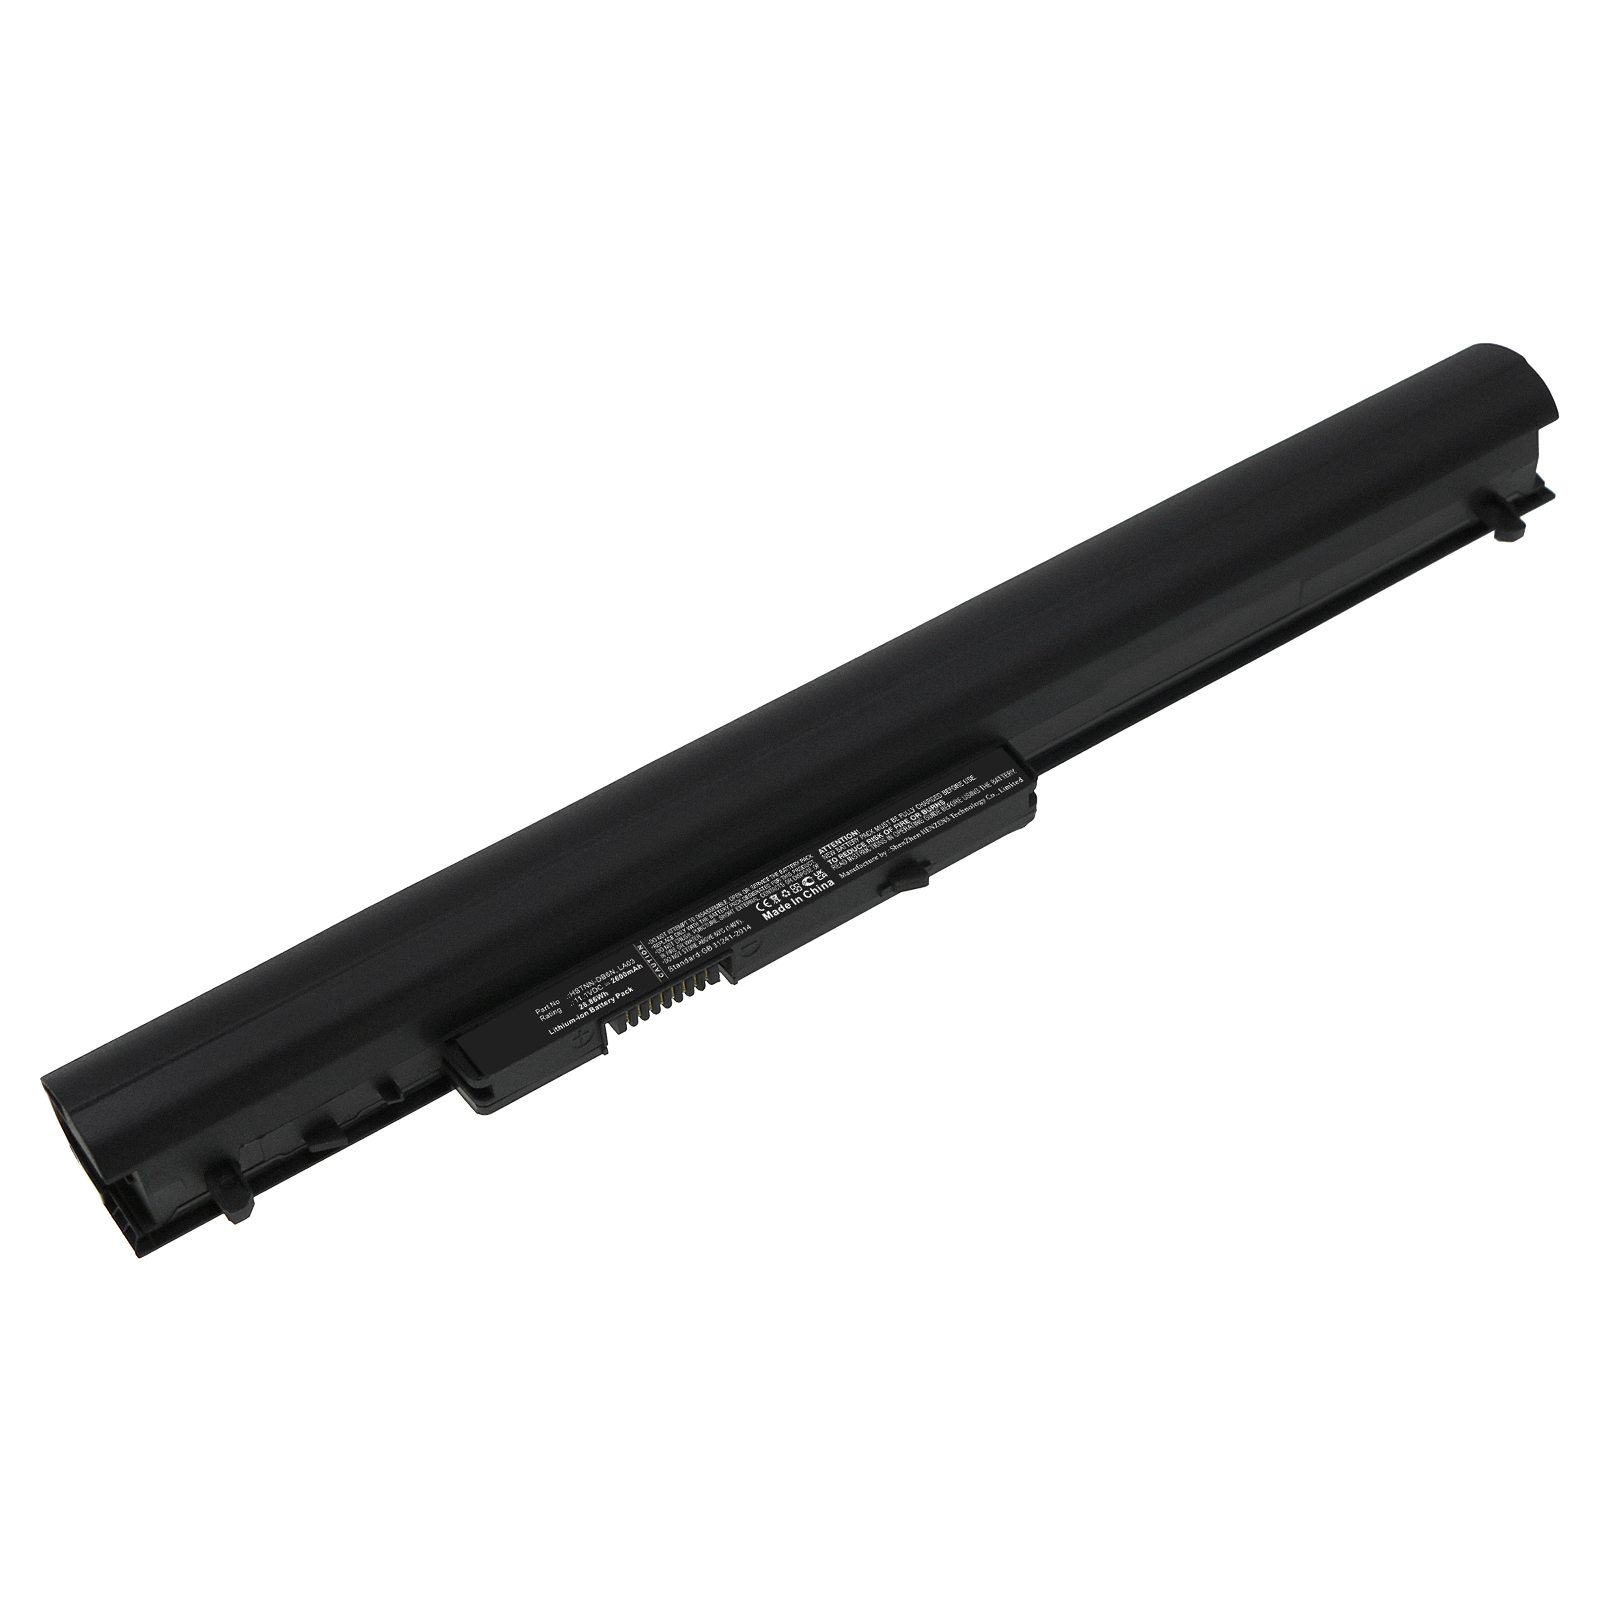 Synergy Digital Laptop Battery, Compatible with HP LA03 Laptop Battery (Li-ion, 11.1V, 2600mAh)